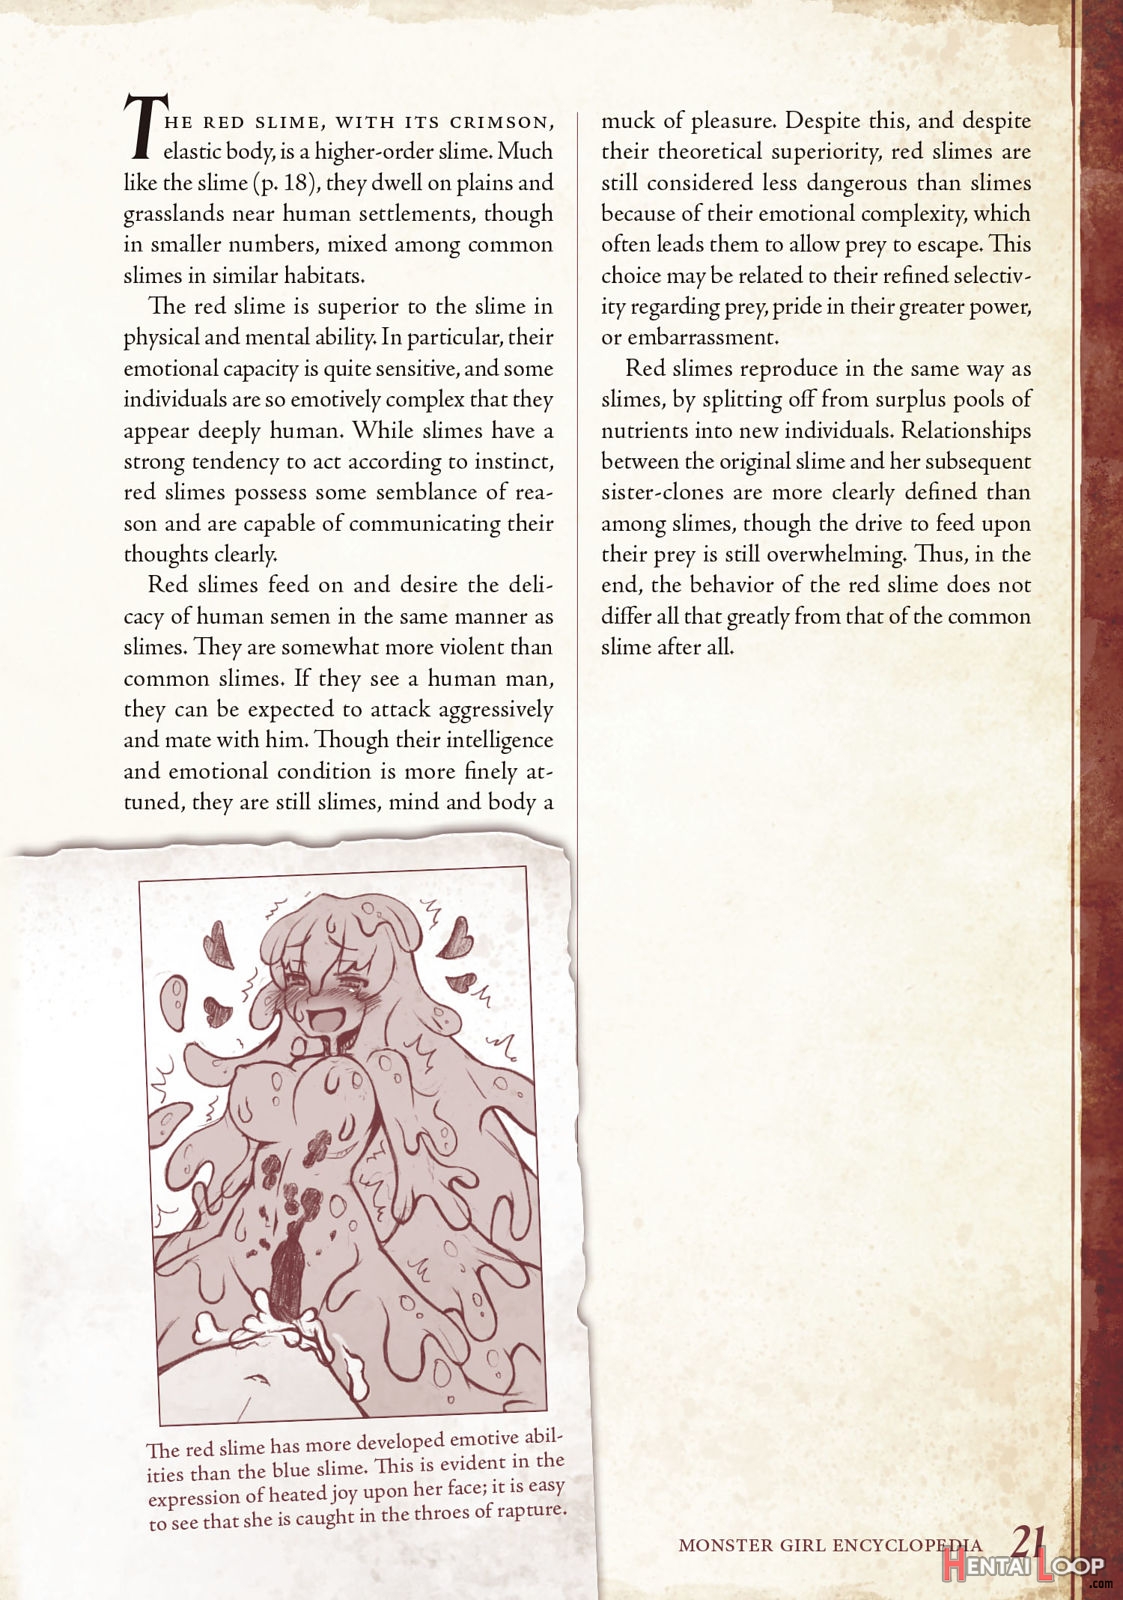 Monster Girl Encyclopedia Vol. 1 page 22